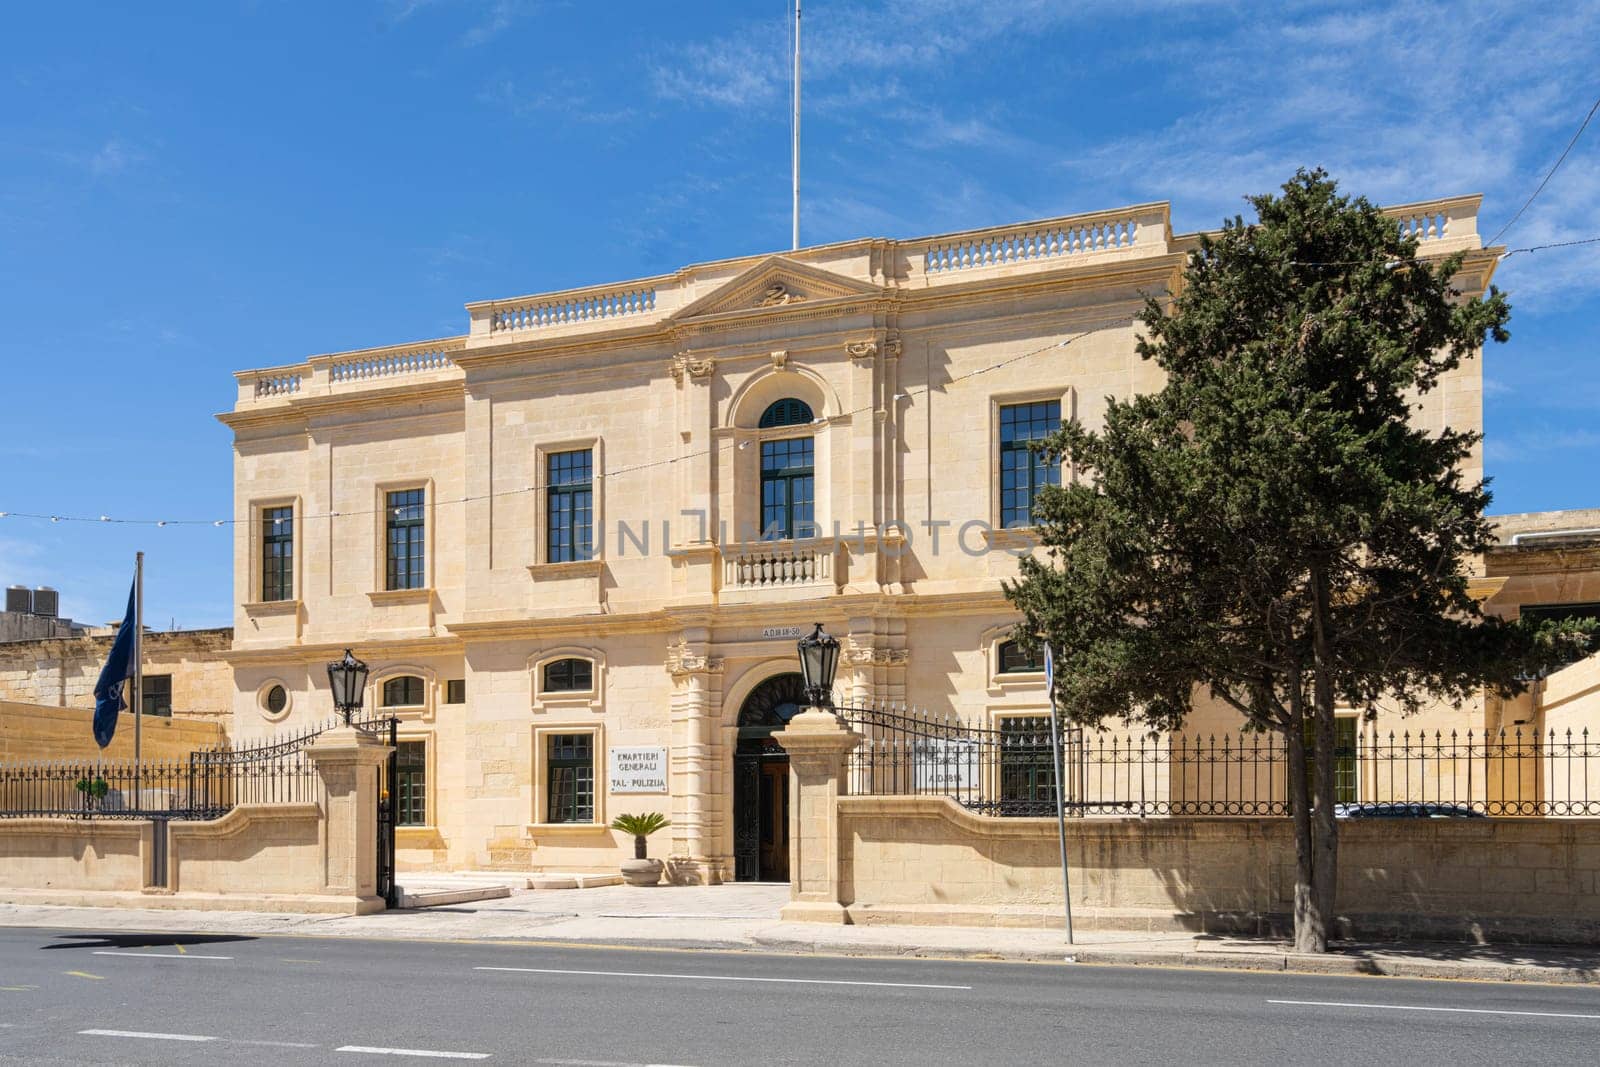 Police Headquarters in Valletta, Malta
Police Headquarters  building in Valletta, Malta
 by sergiodv